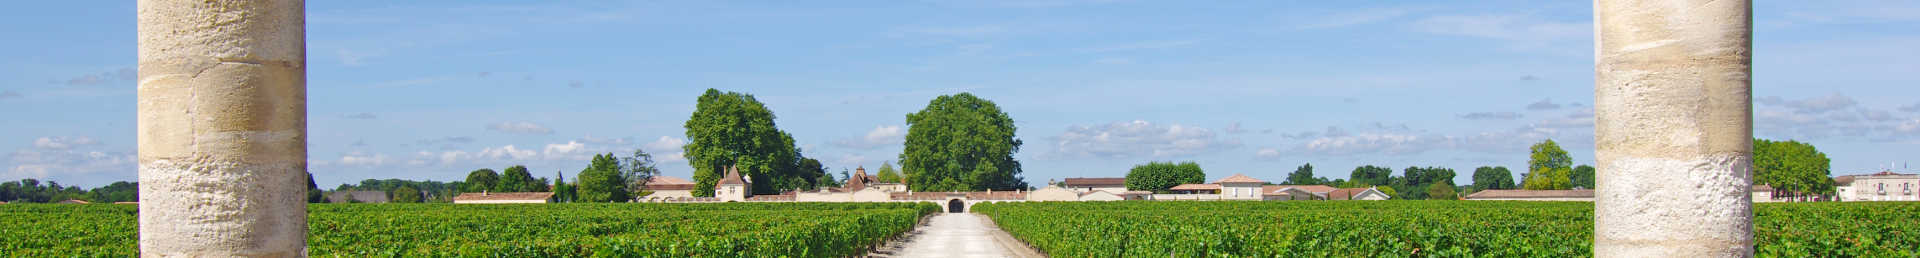 Image for Pauillac Wine Bordeaux, France content section